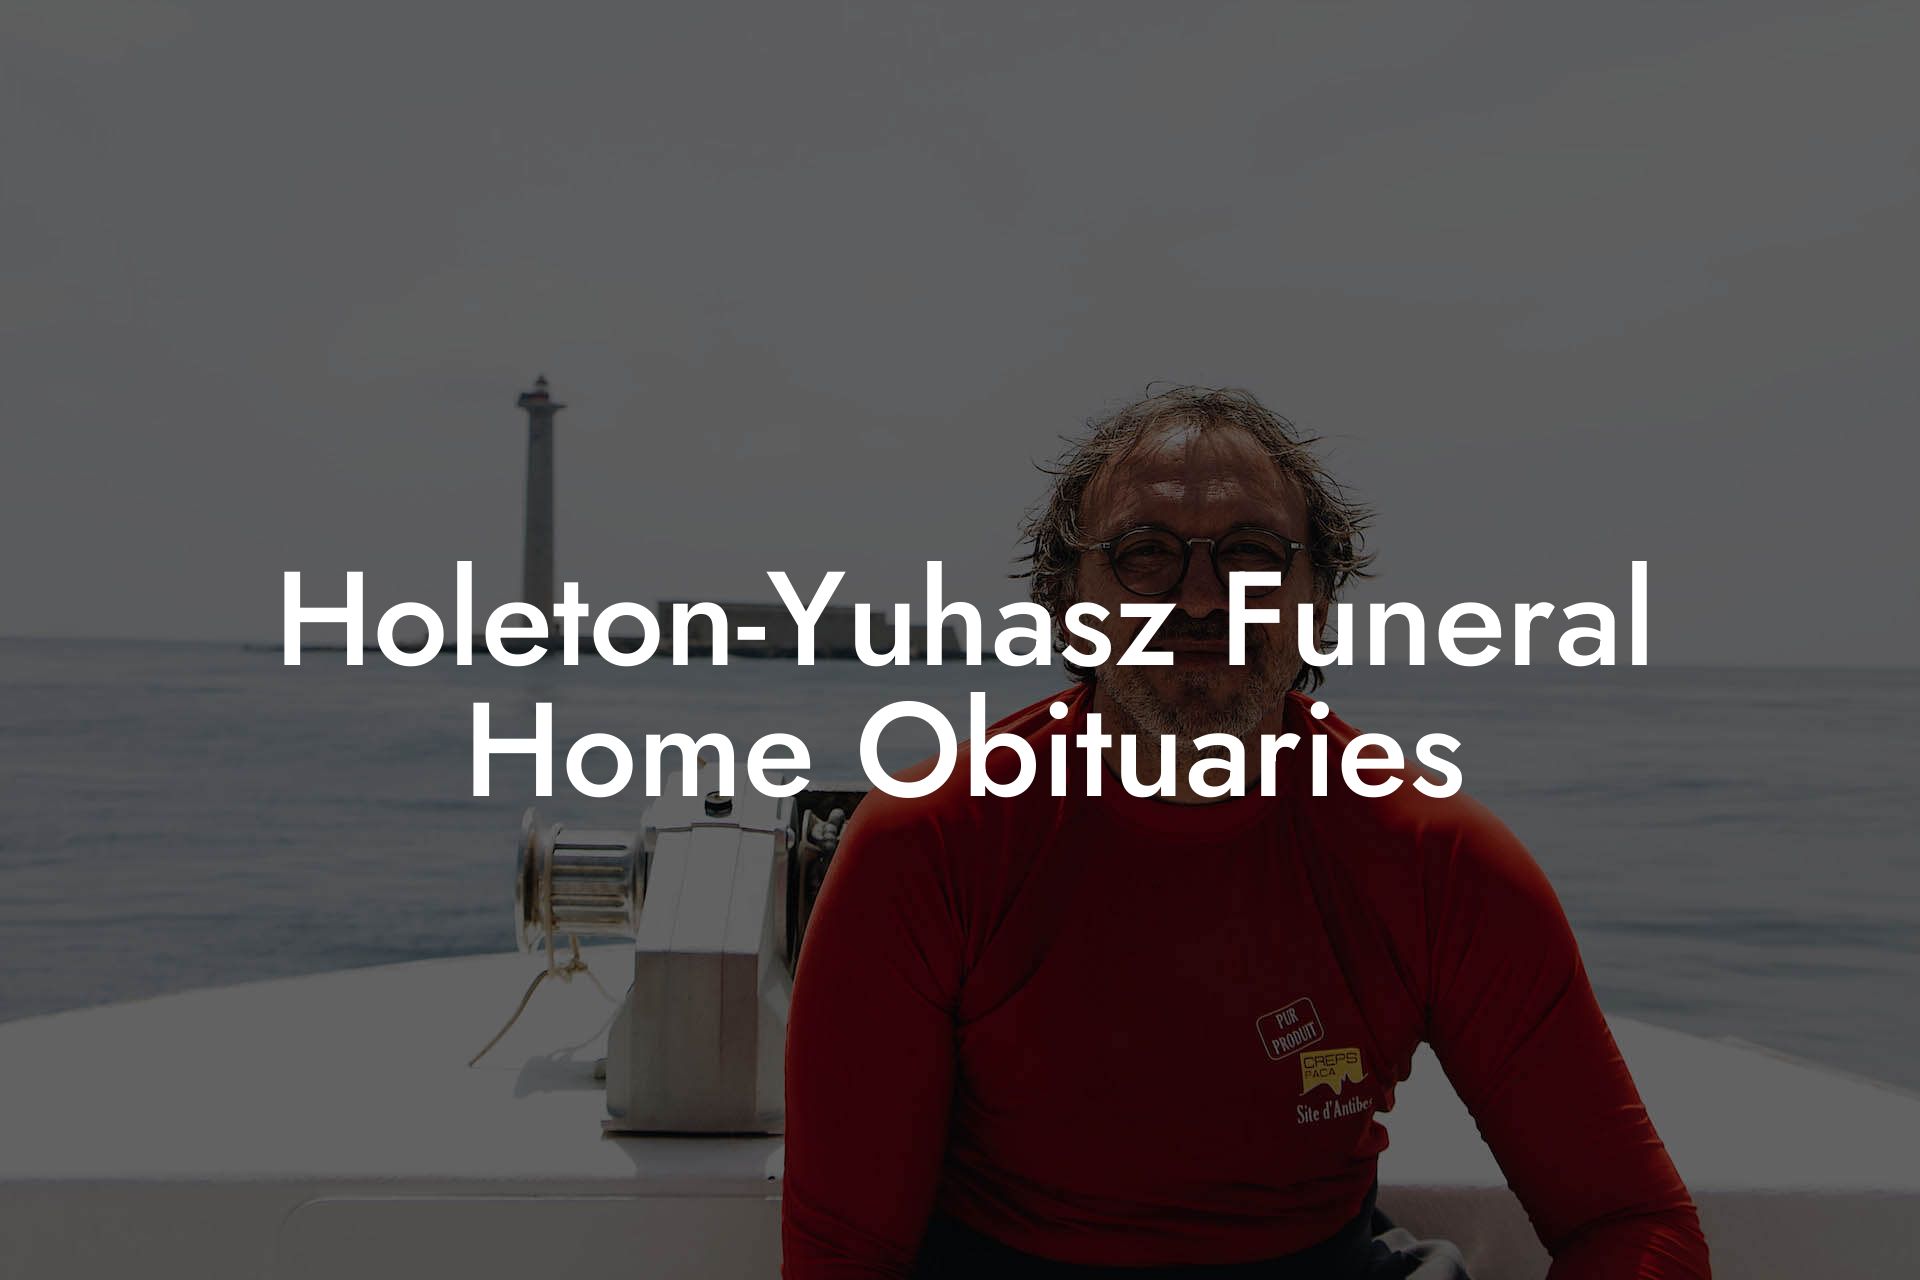 Holeton-Yuhasz Funeral Home Obituaries